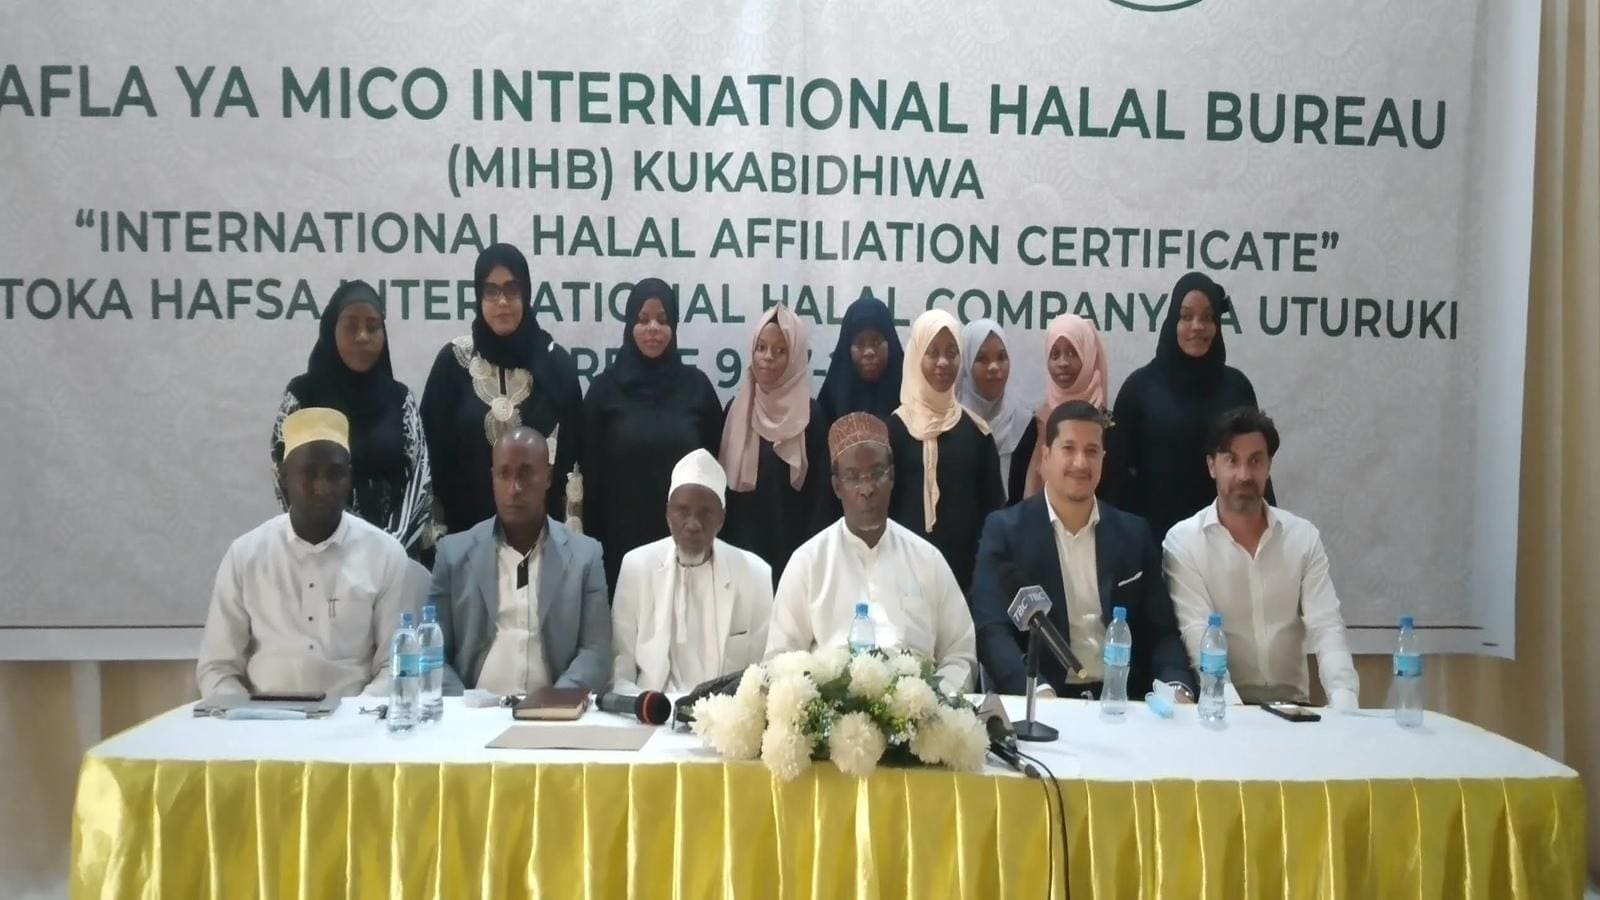 MIHB Tanzania receives International Halal affiliation certificate paving way for meat export market